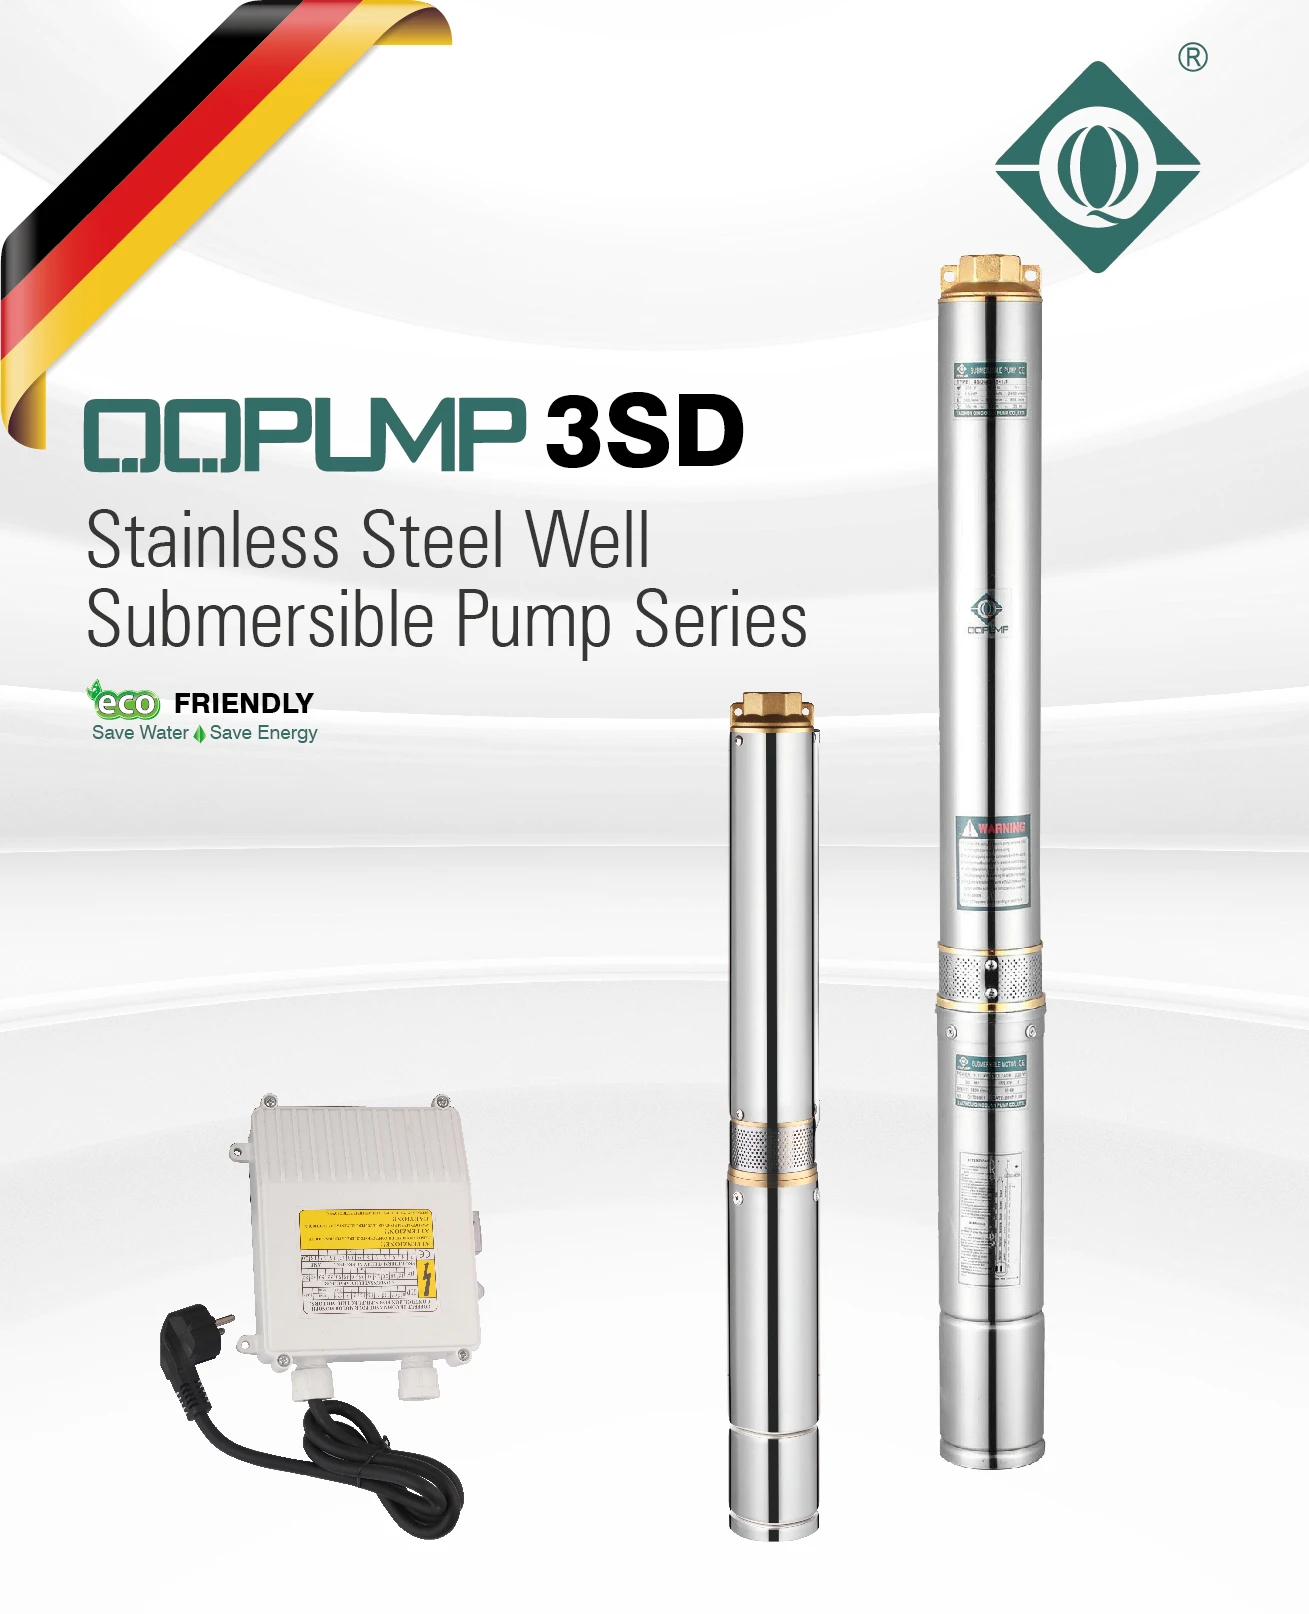 3SDM 2.5/20 High lift stainless steel pump deep well pump submersible pump manufacturers direct sales